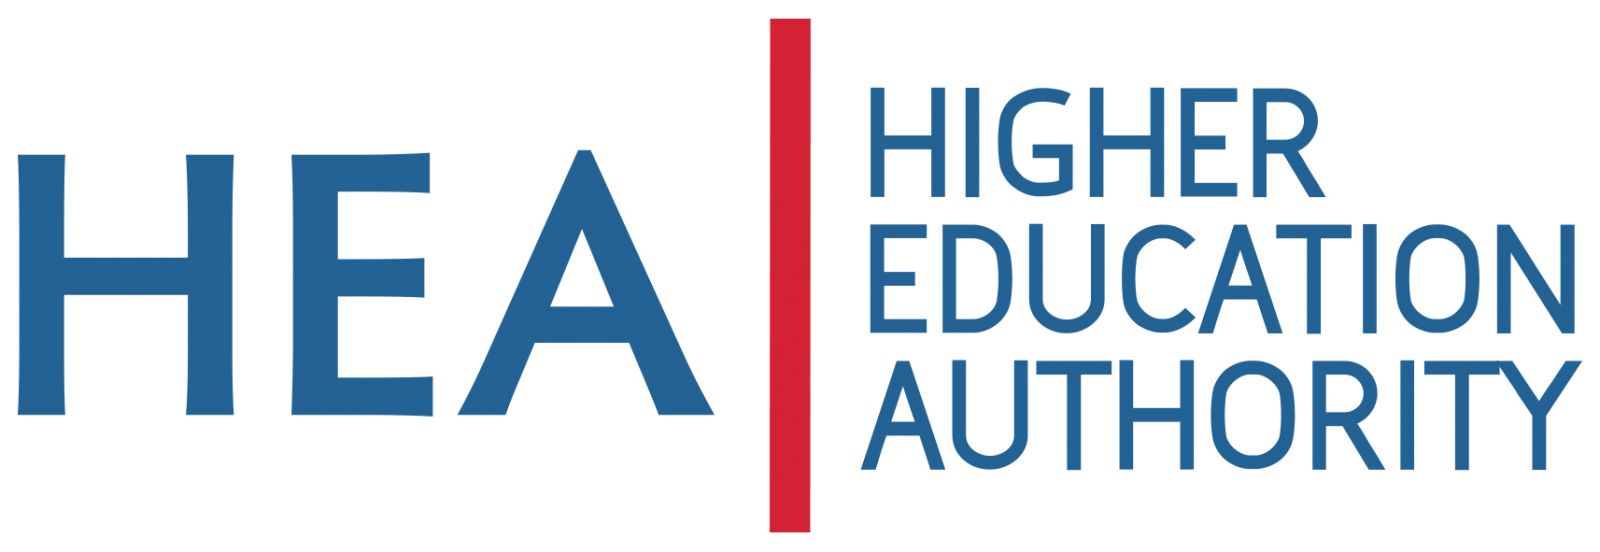 Higher Education Authority Logo